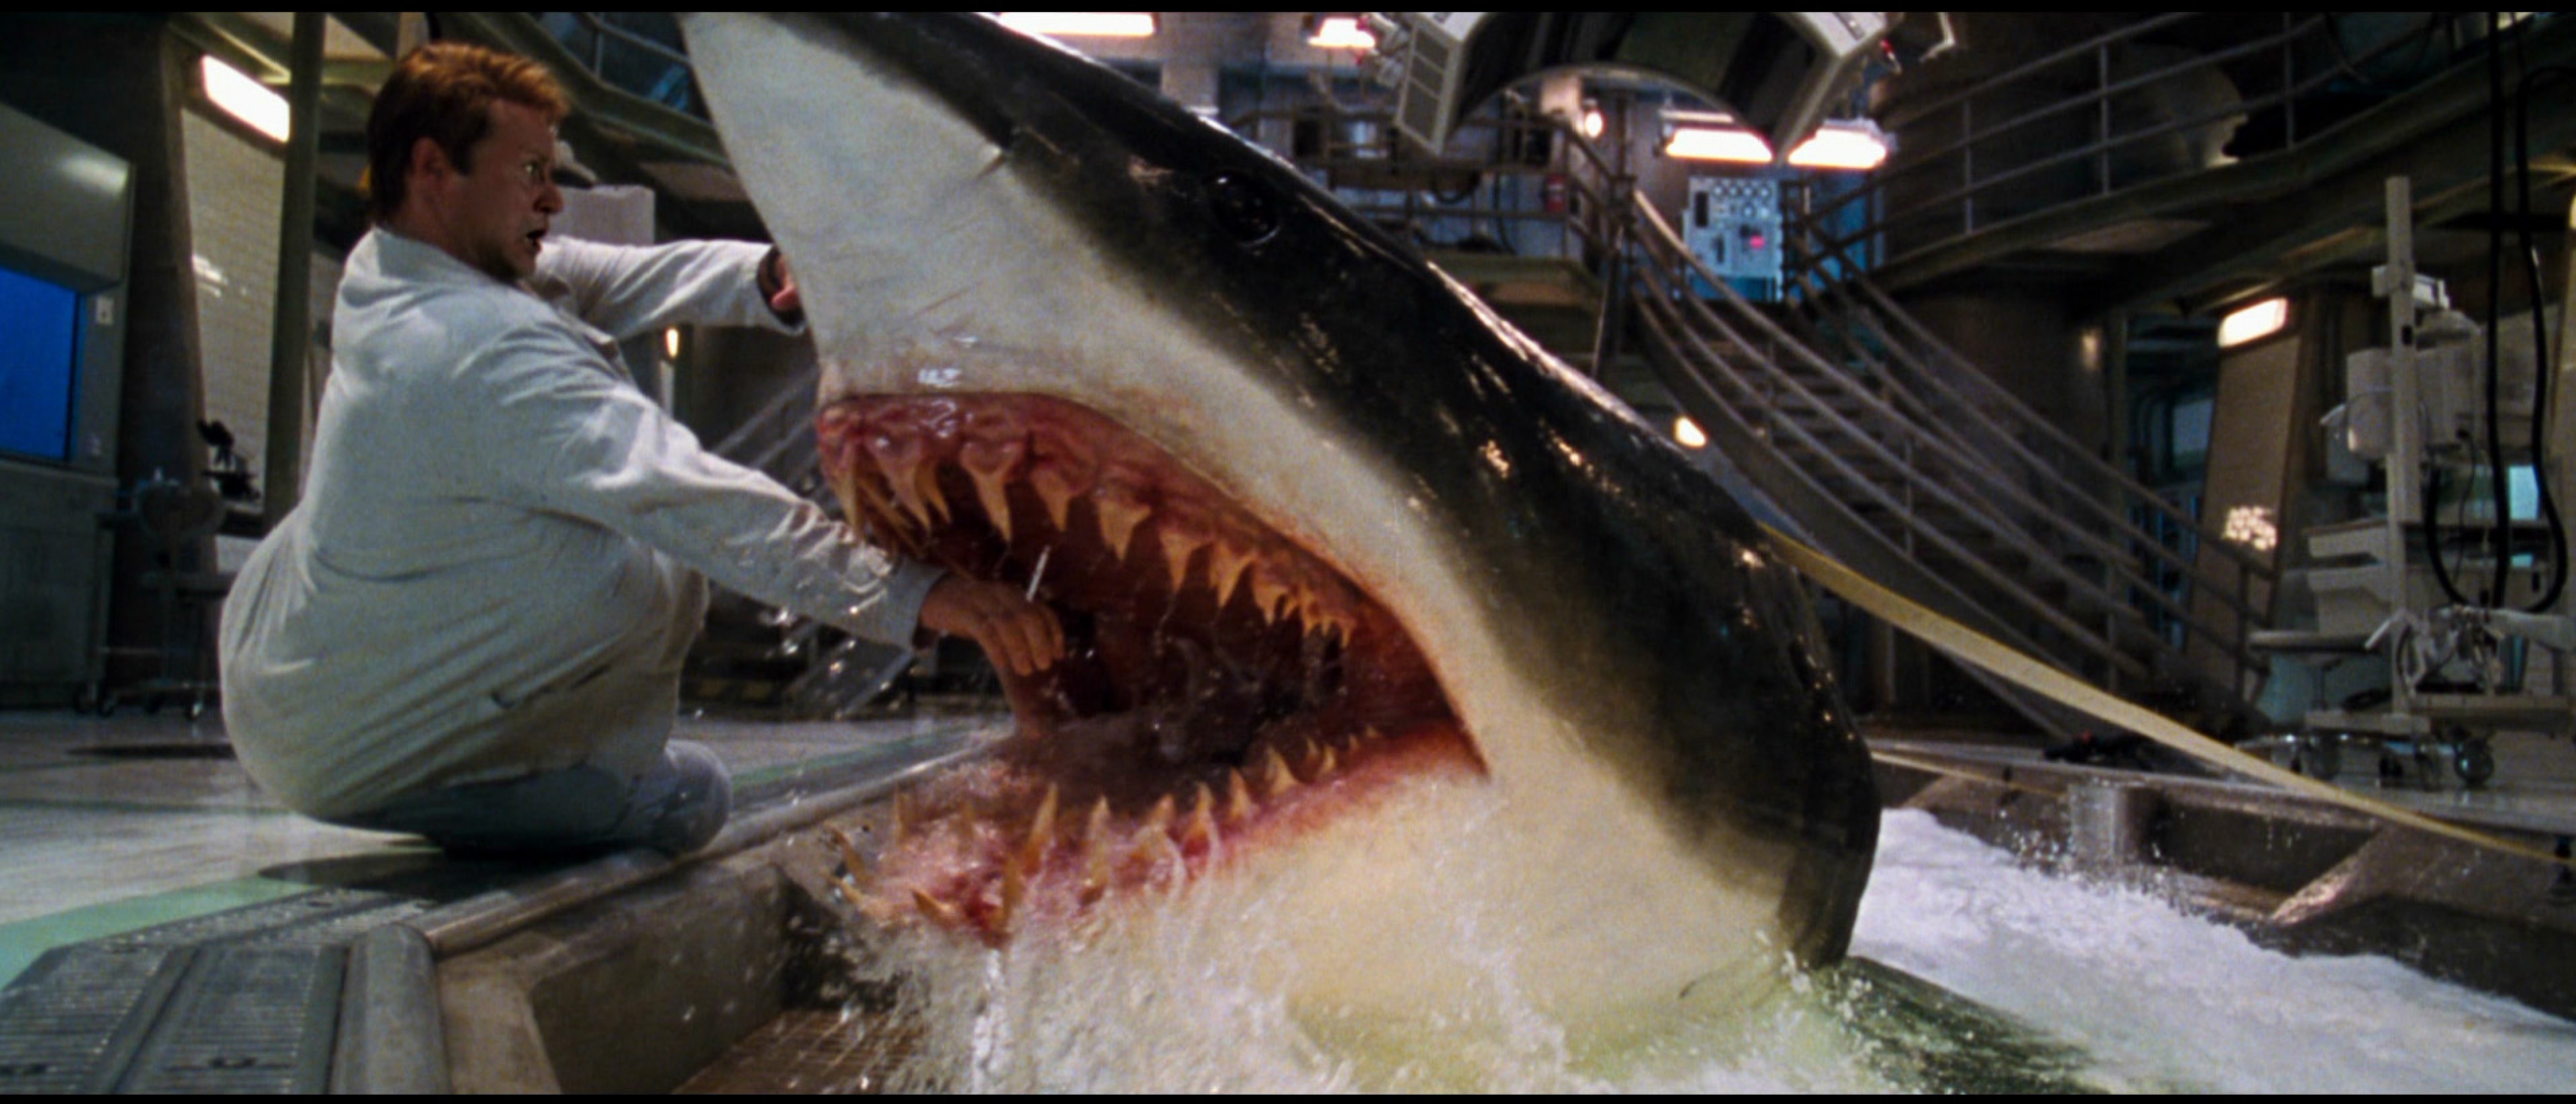 Лучшие новинки про акул. Глубокое синее море Deep Blue Sea (1999). Стеллан Скарсгард глубокое синее море.